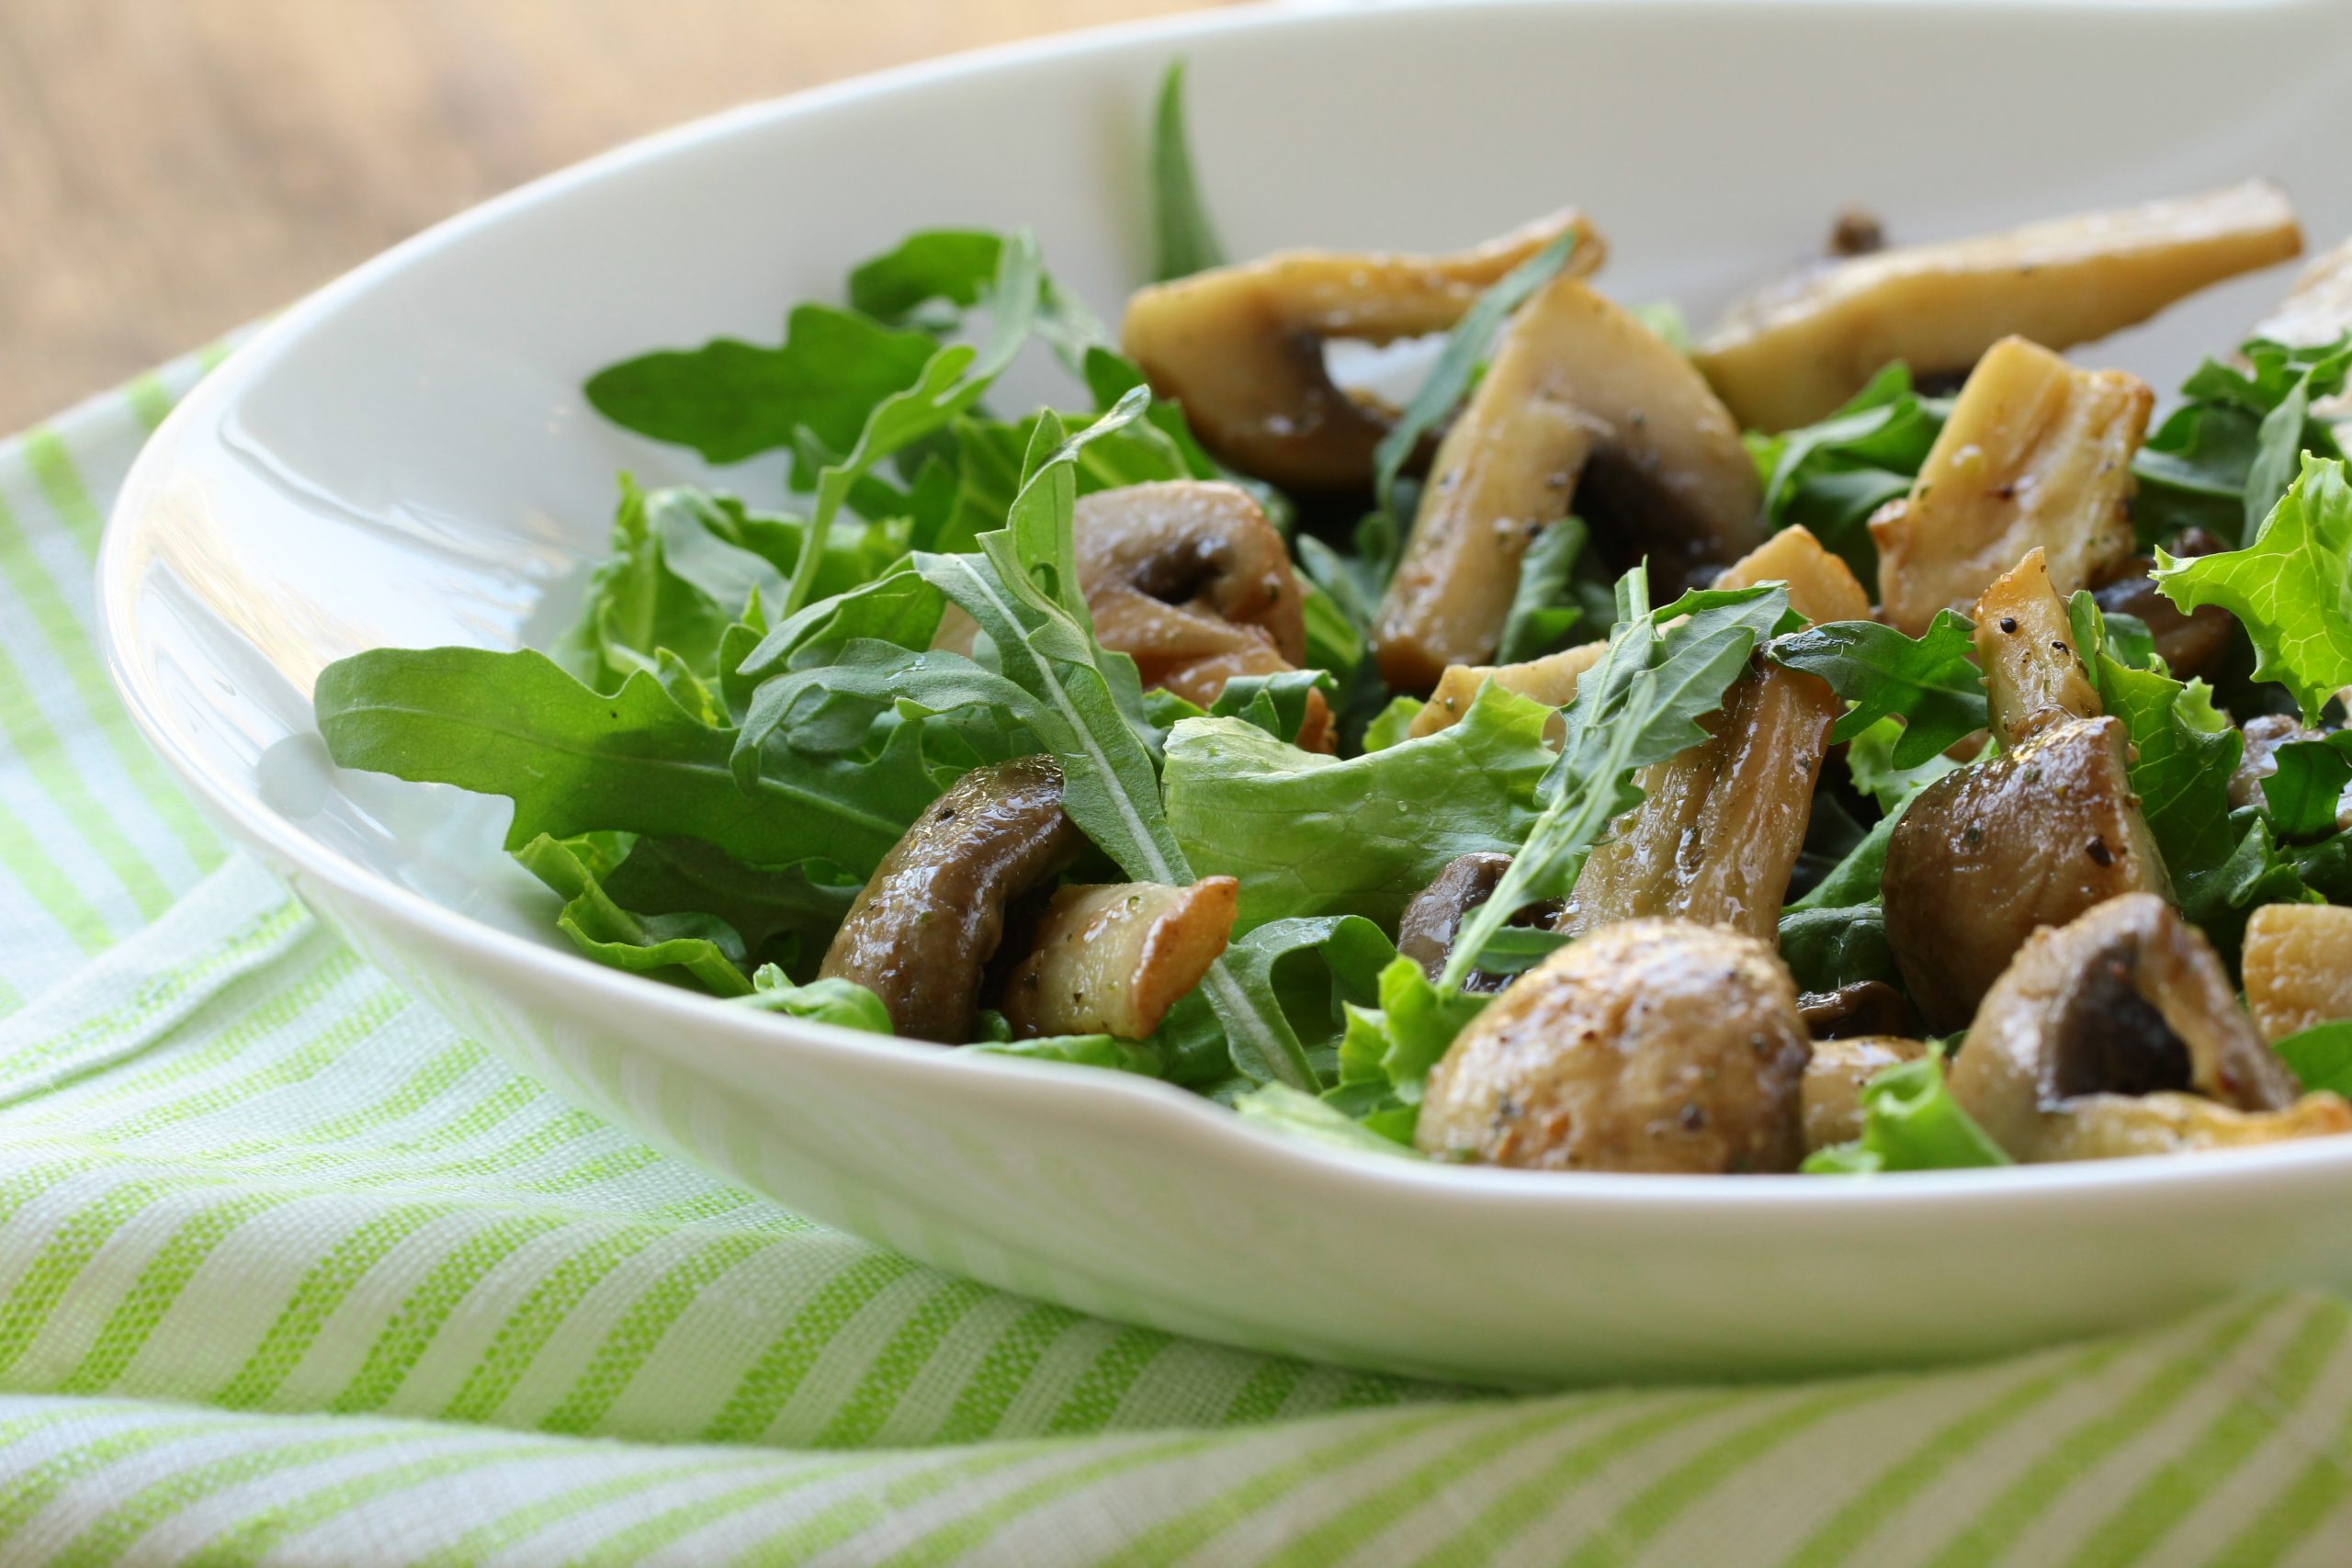 Warm Shiitake Mushroom and Pine Nut Salad